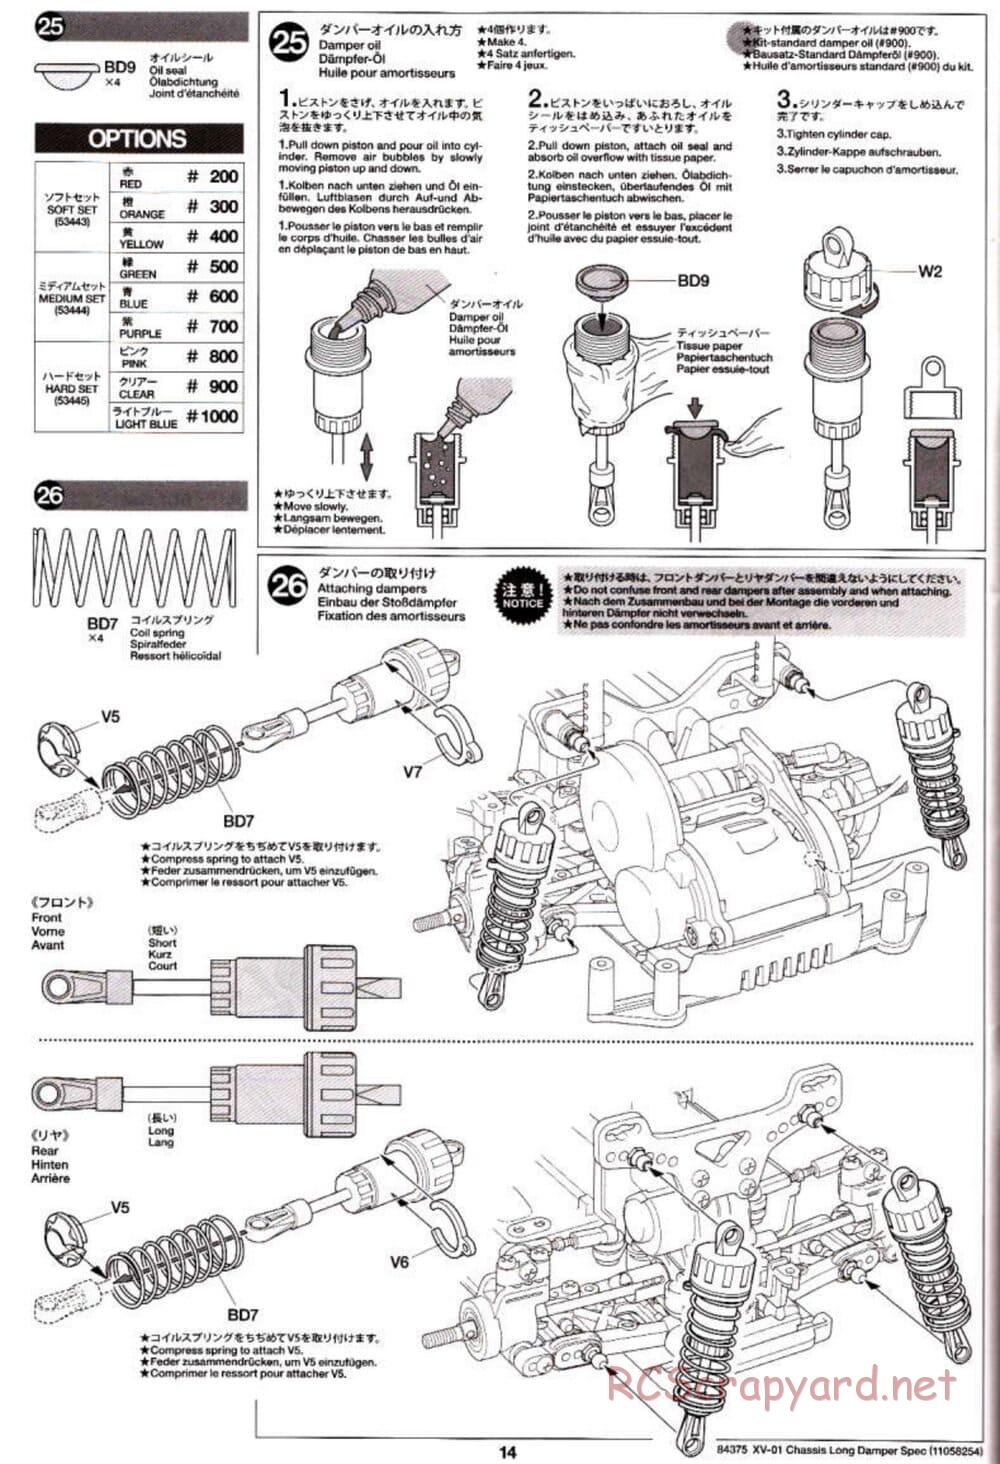 Tamiya - XV-01 Long Damper Spec Chassis - Manual - Page 14